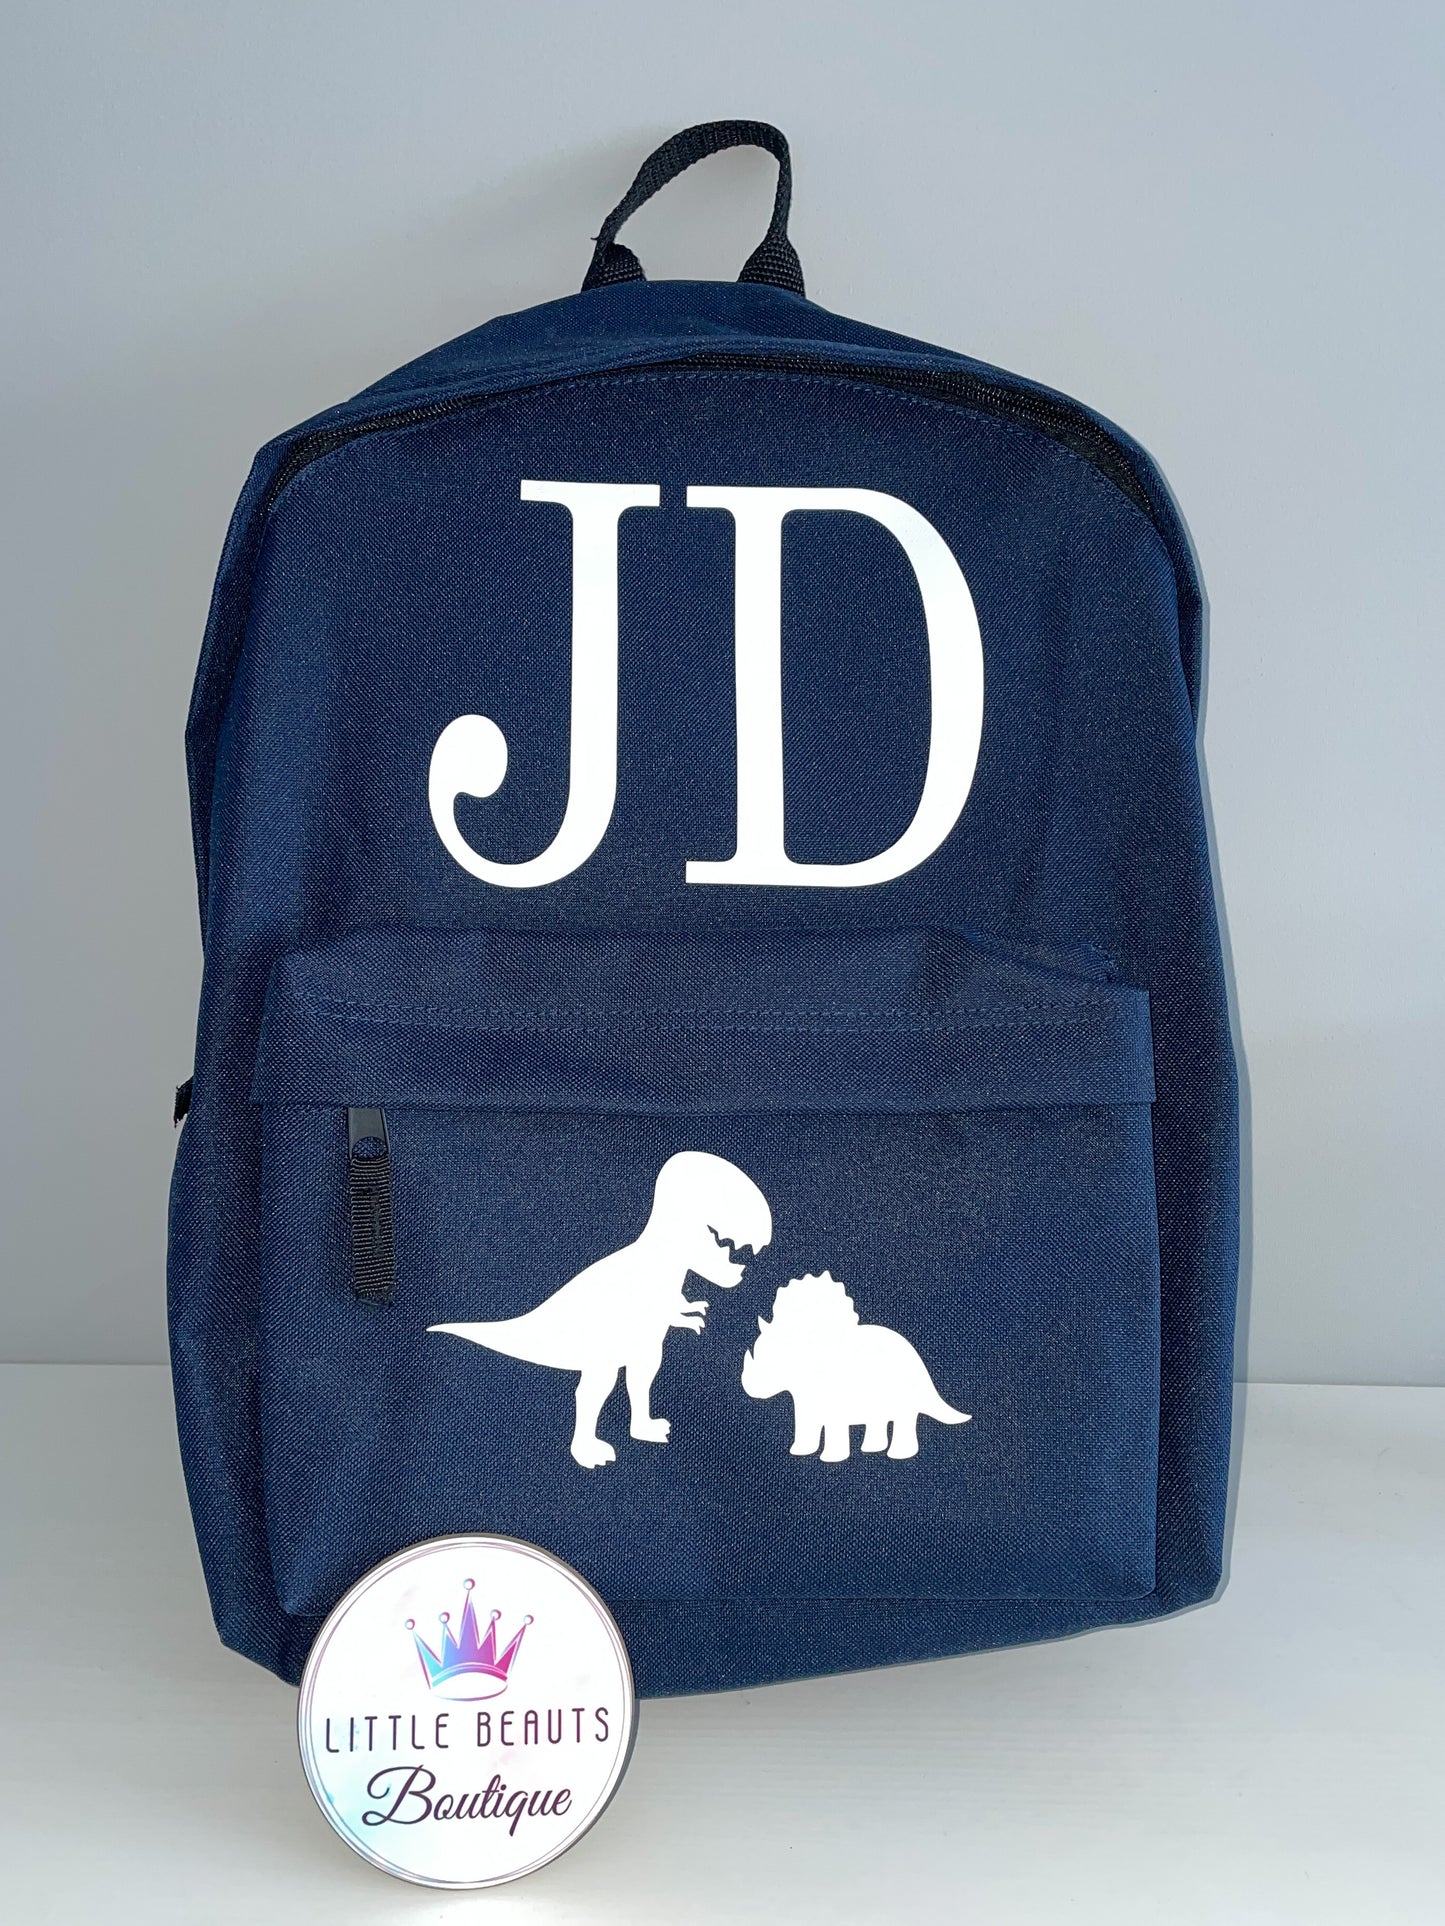 Personalised Large Backpack 18 Litre - Rucksack - School Bag, Weekend Bag, Nursey Bag, Children's Bag - Back To School